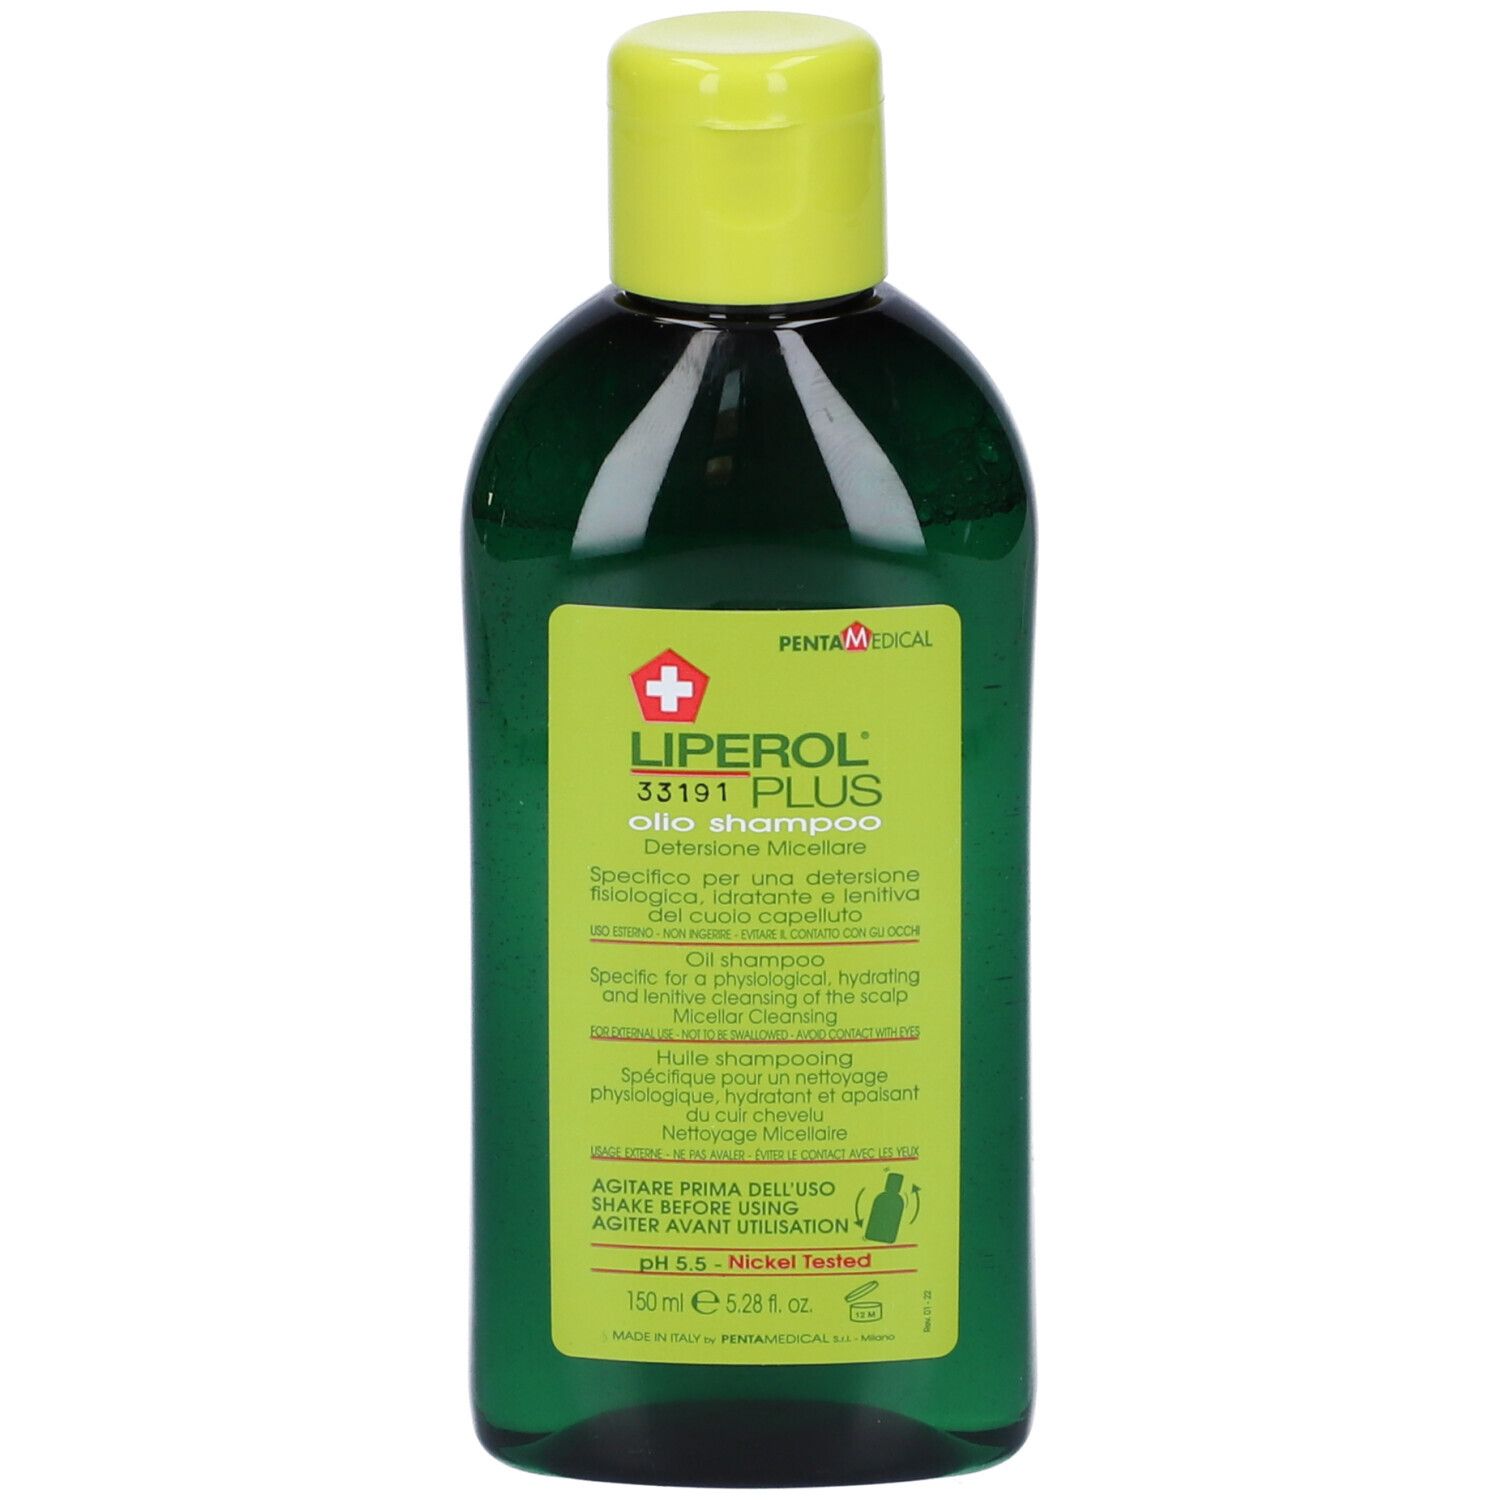 Liperol® Plus Olio Shampoo